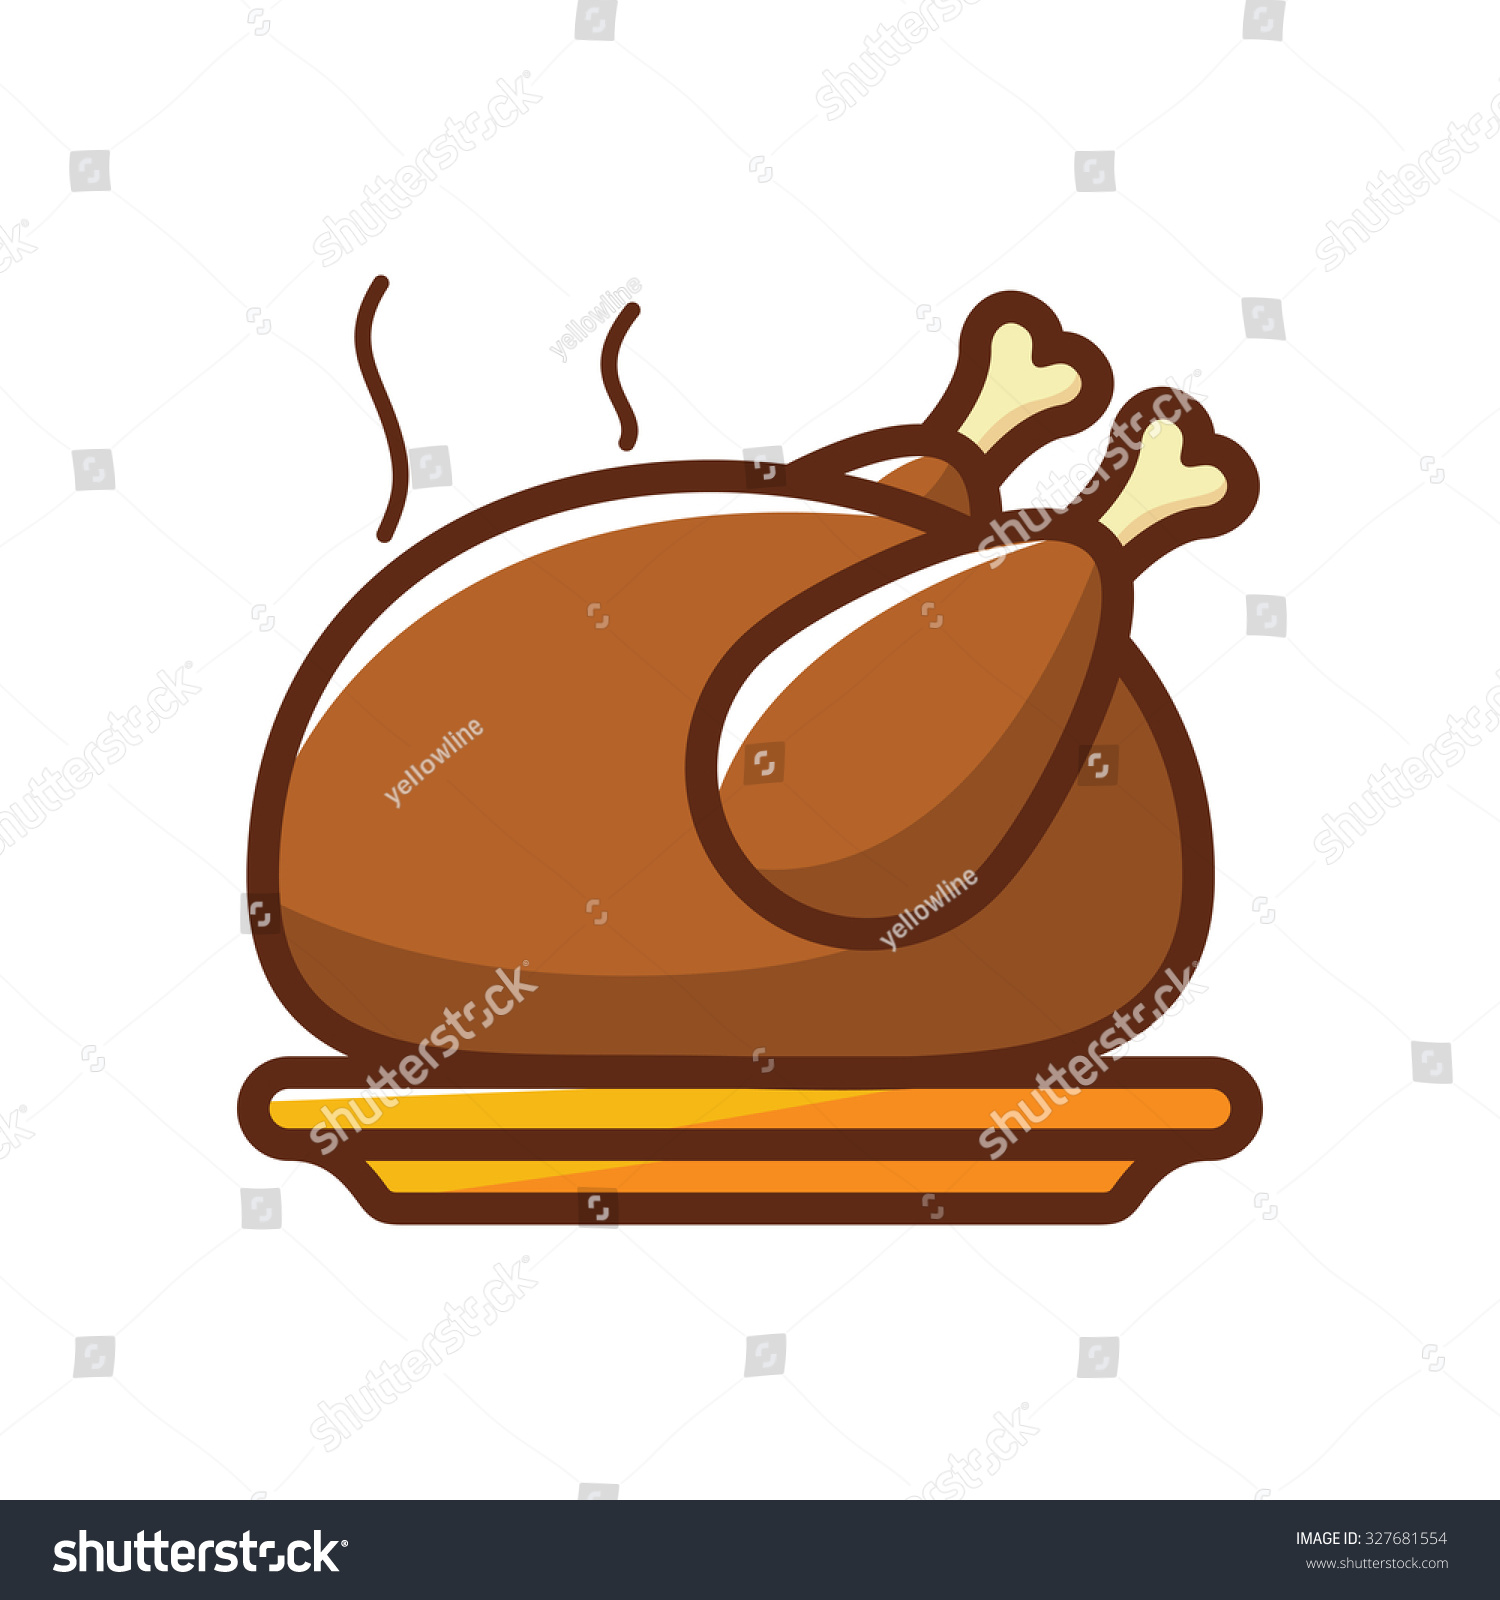 Chicken Grilled Vector Illustration - 327681554 : Shutterstock